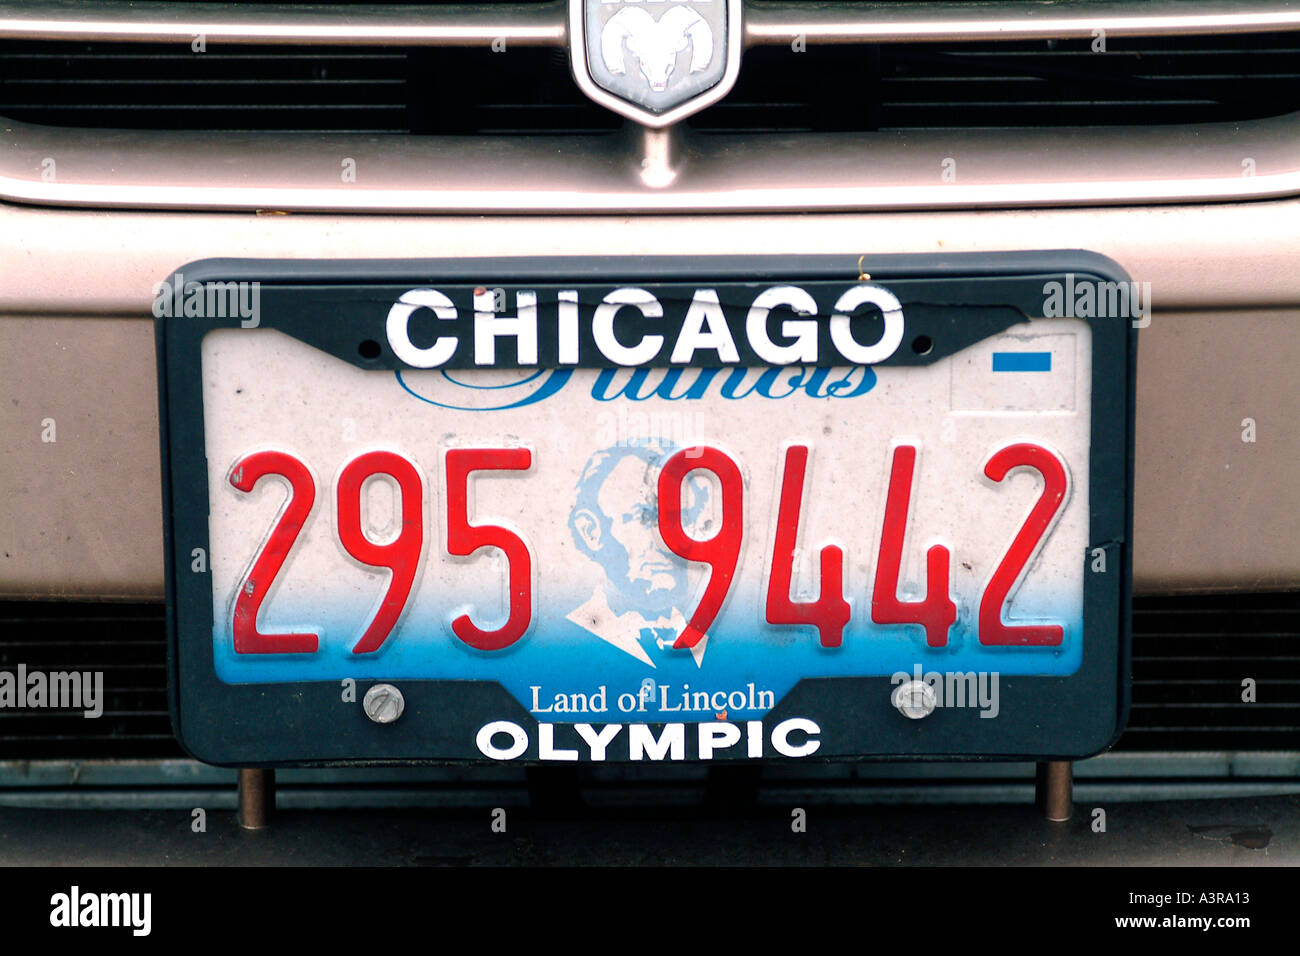 Chicago car registration plates Stock Photo - Alamy